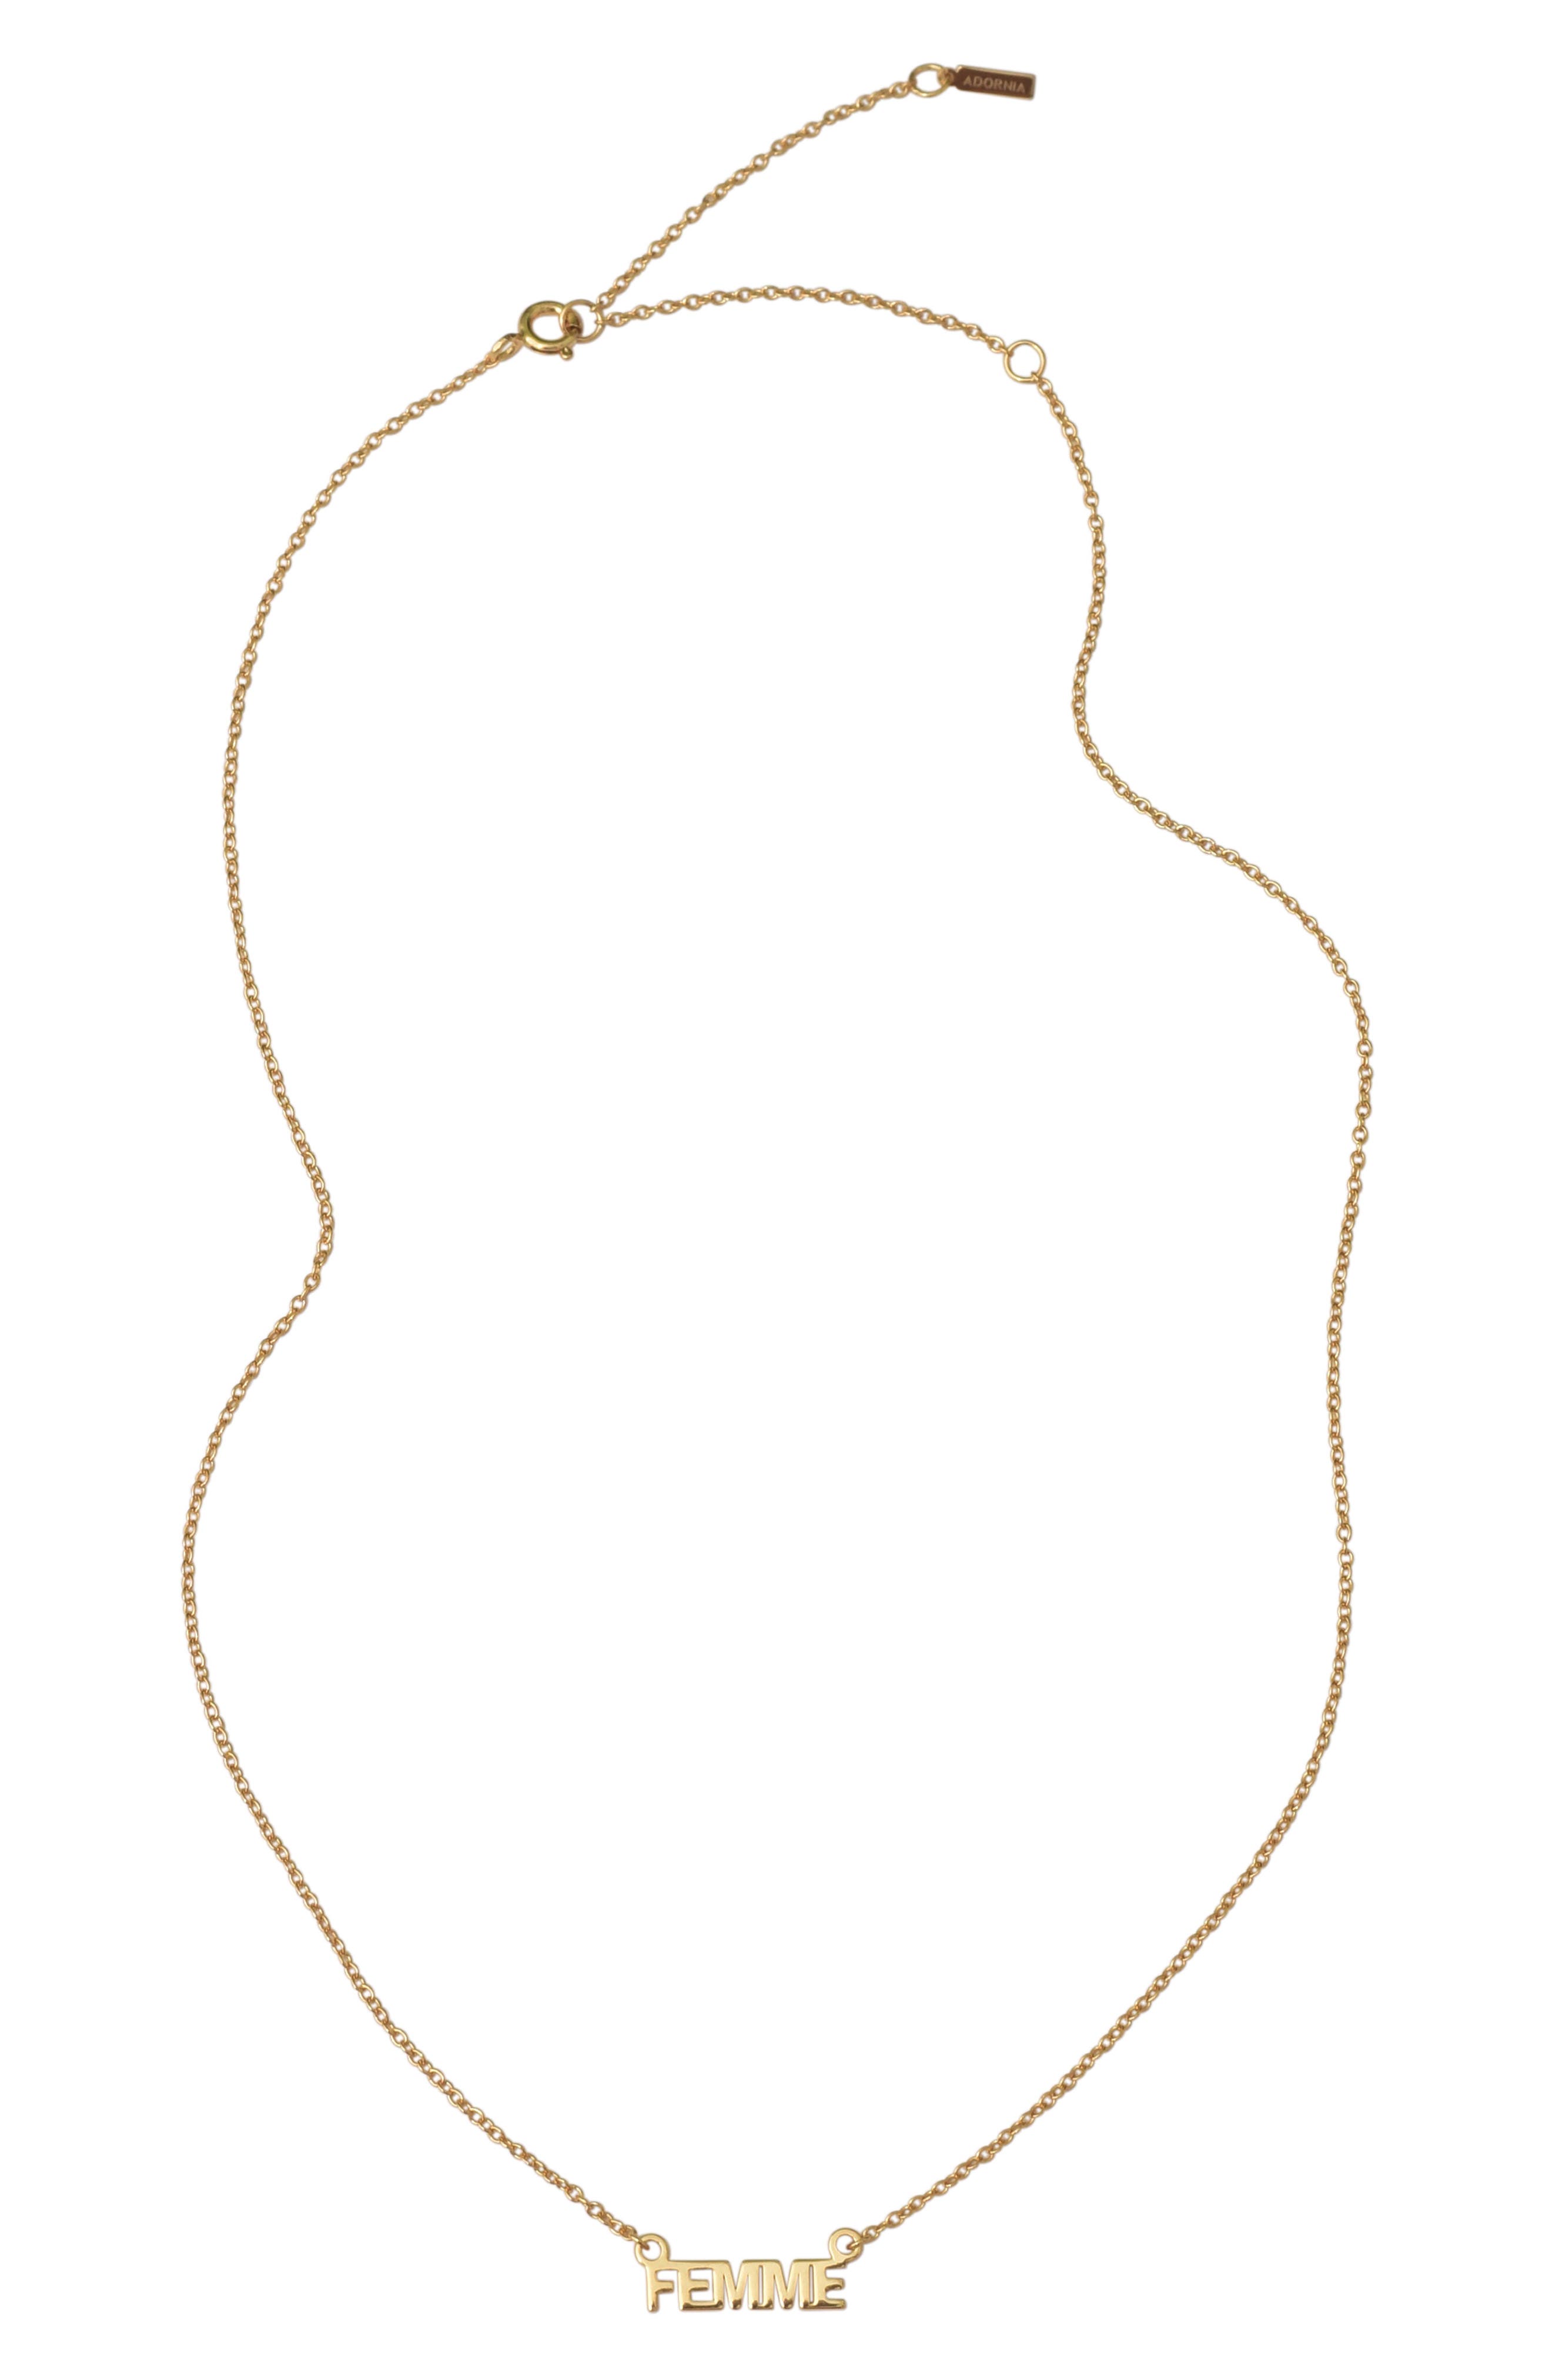 Adornia 14k Gold Vermeil Femme Pendant Necklace